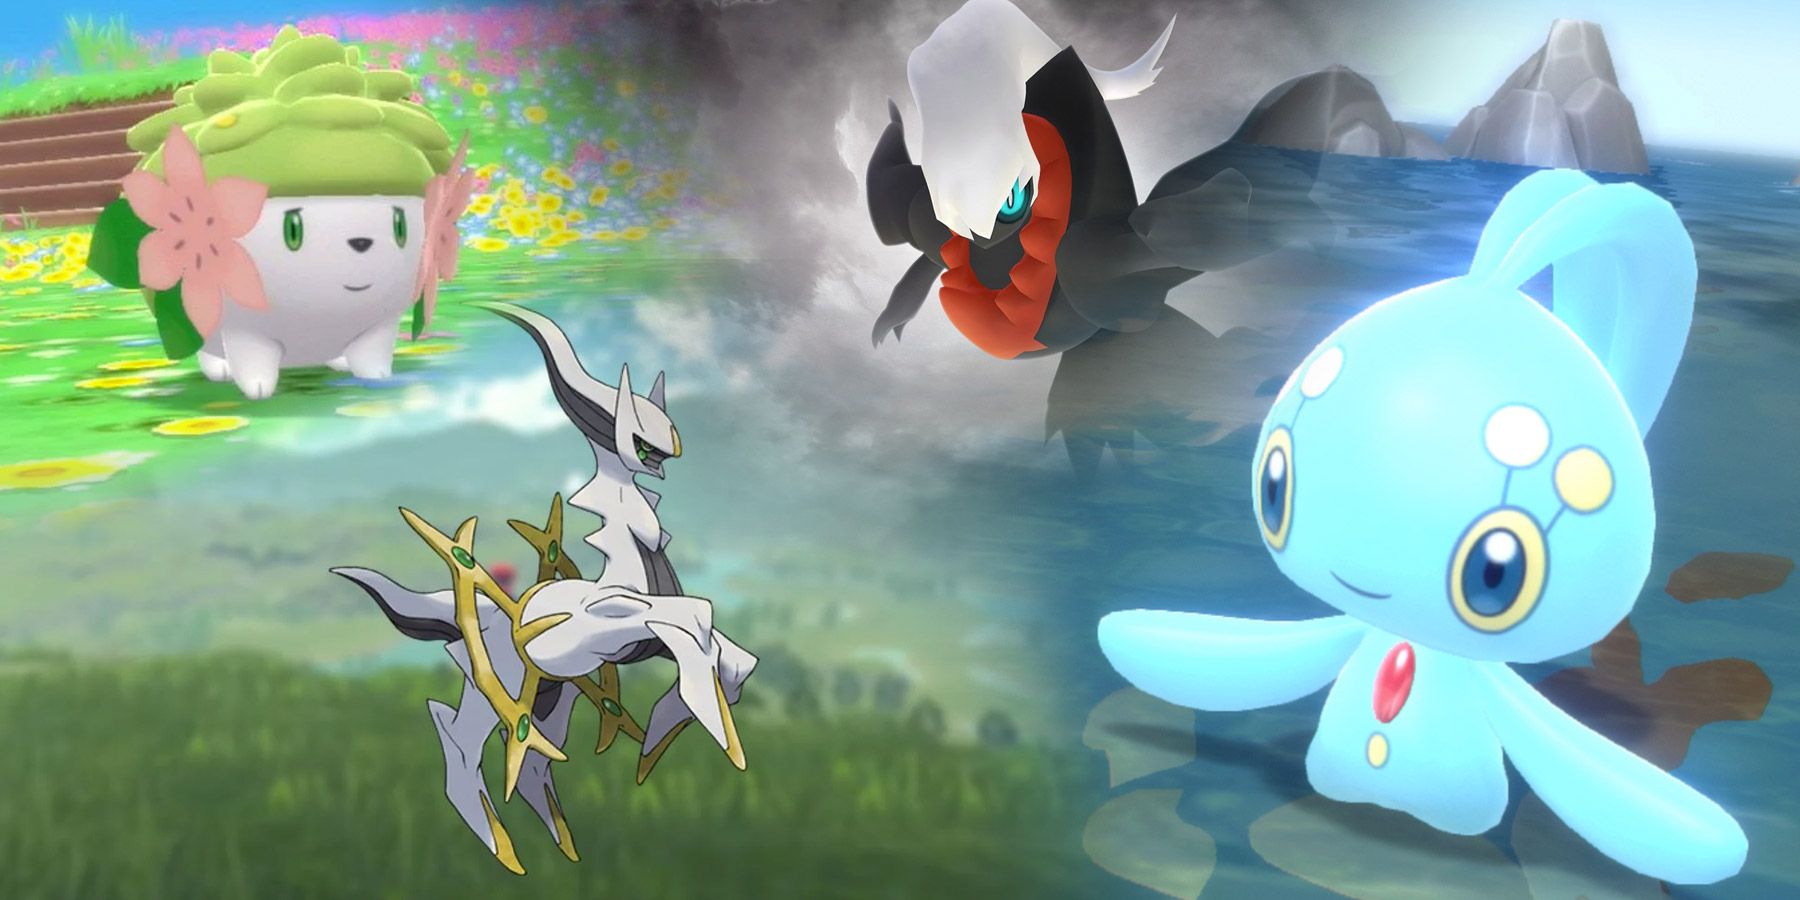 Pokémon Legends: Arceus, Pokémon Brilliant Diamond, And Pokemon Shining  Pearl Get Release Dates - Hey Poor Player